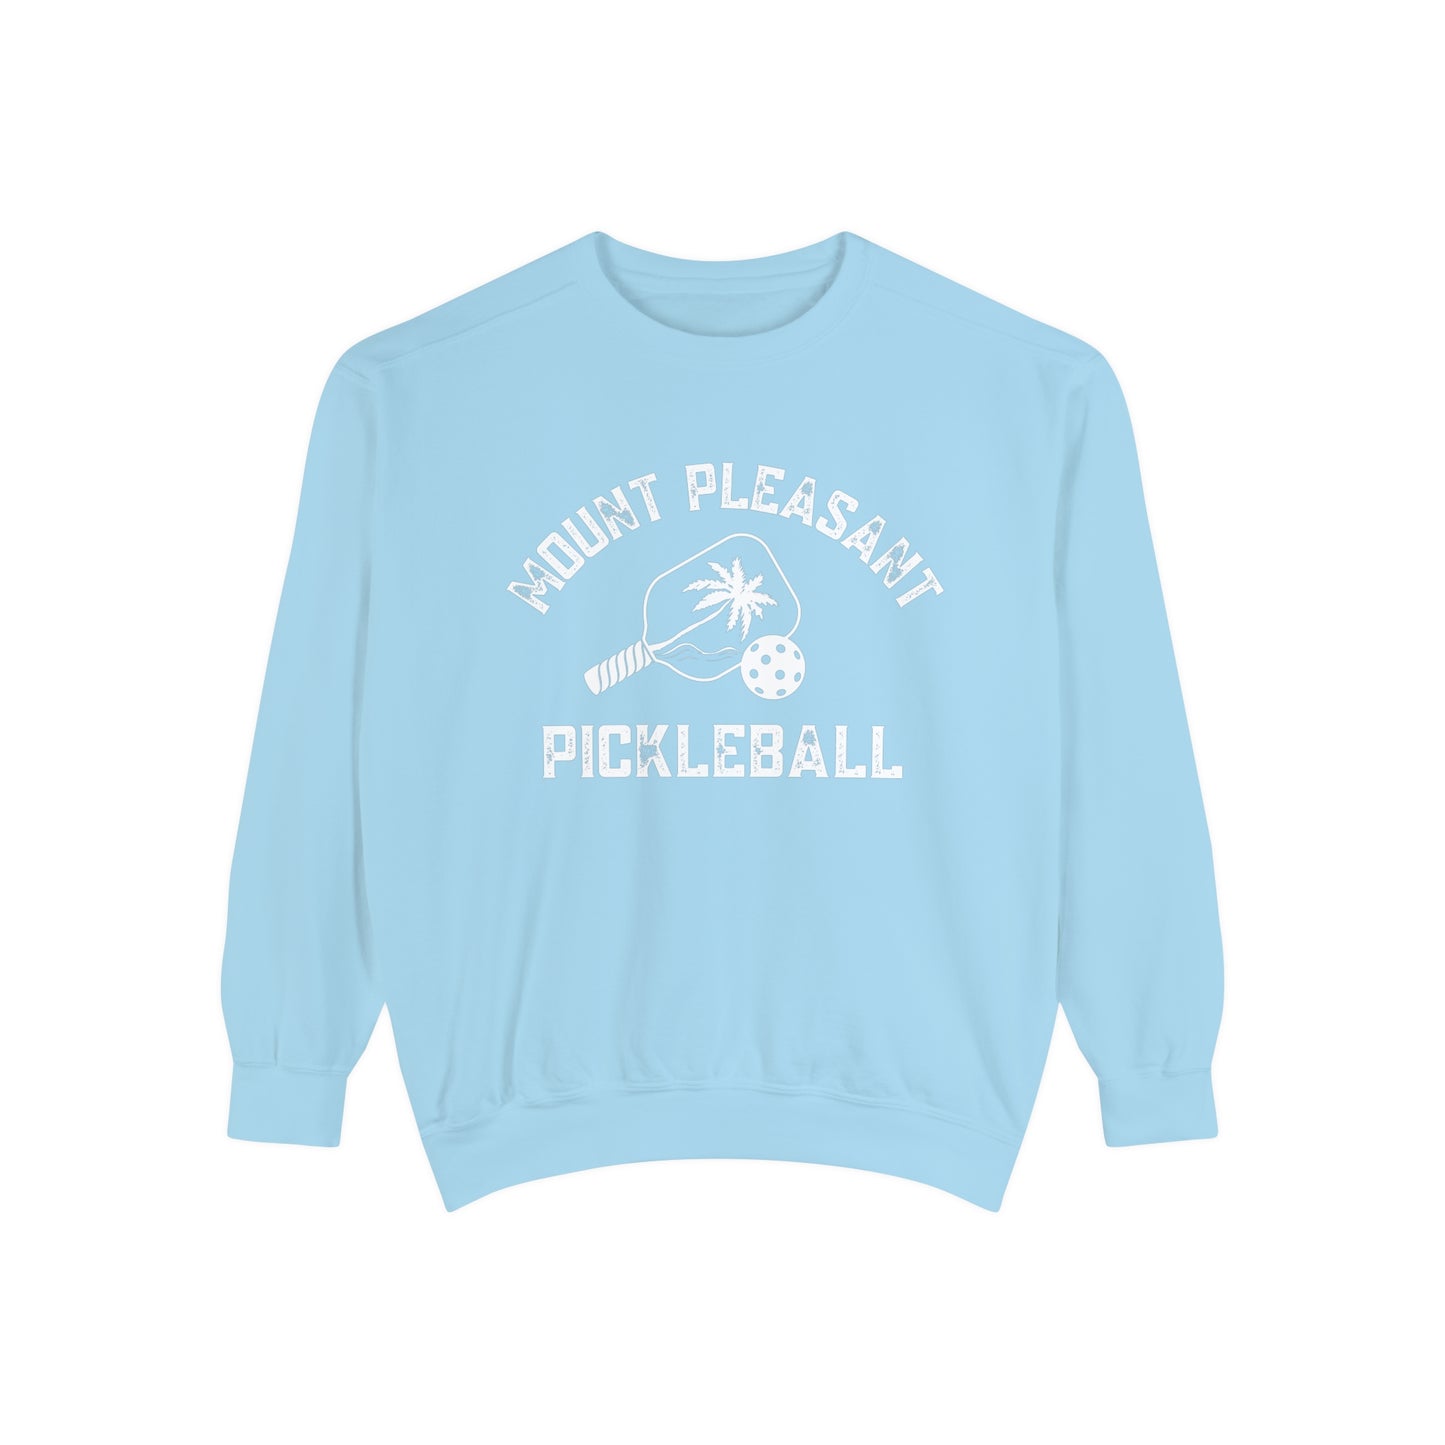 Mount Pleasant Pickleball Crew - Comfort Colors